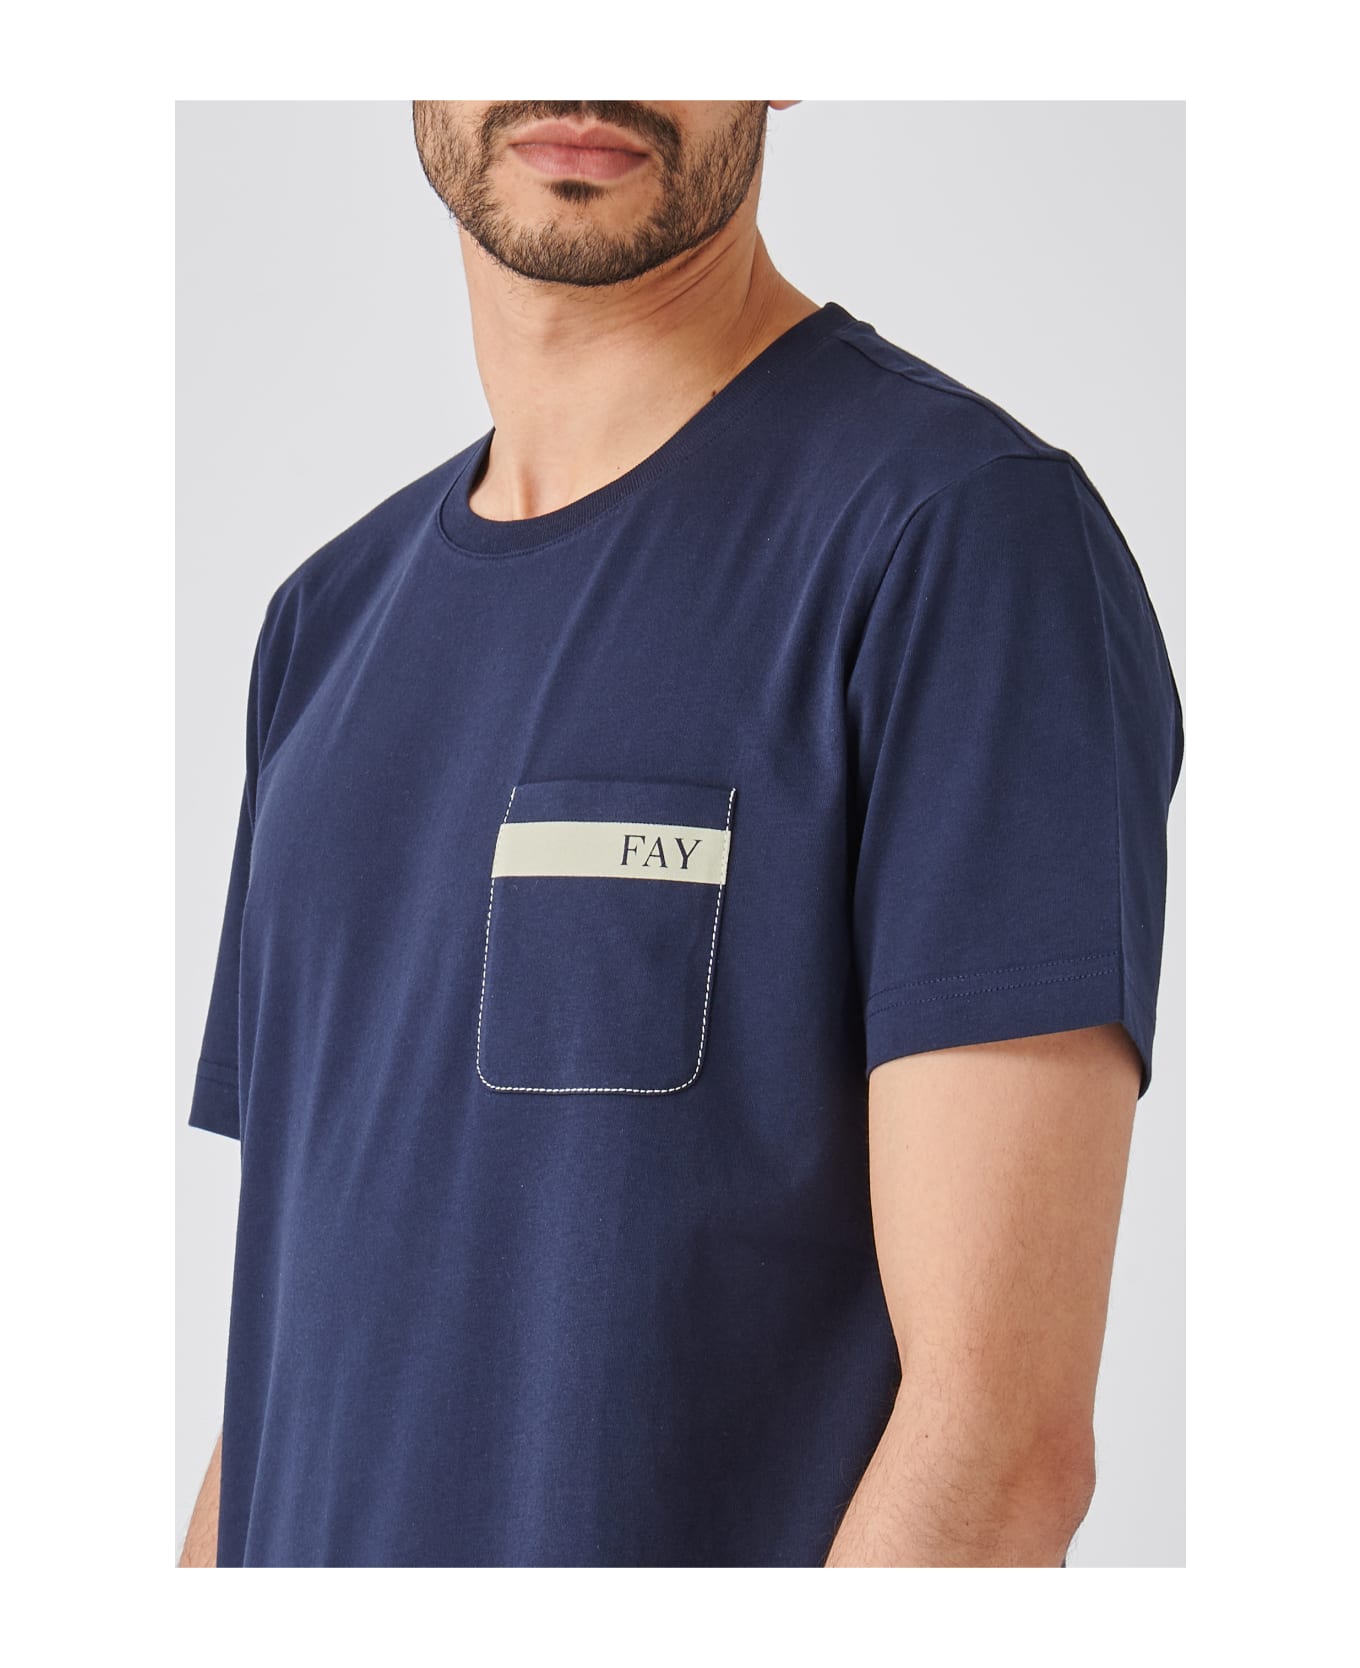 Fay T-shirt Jersey Printed Poket T-shirt - NAVY